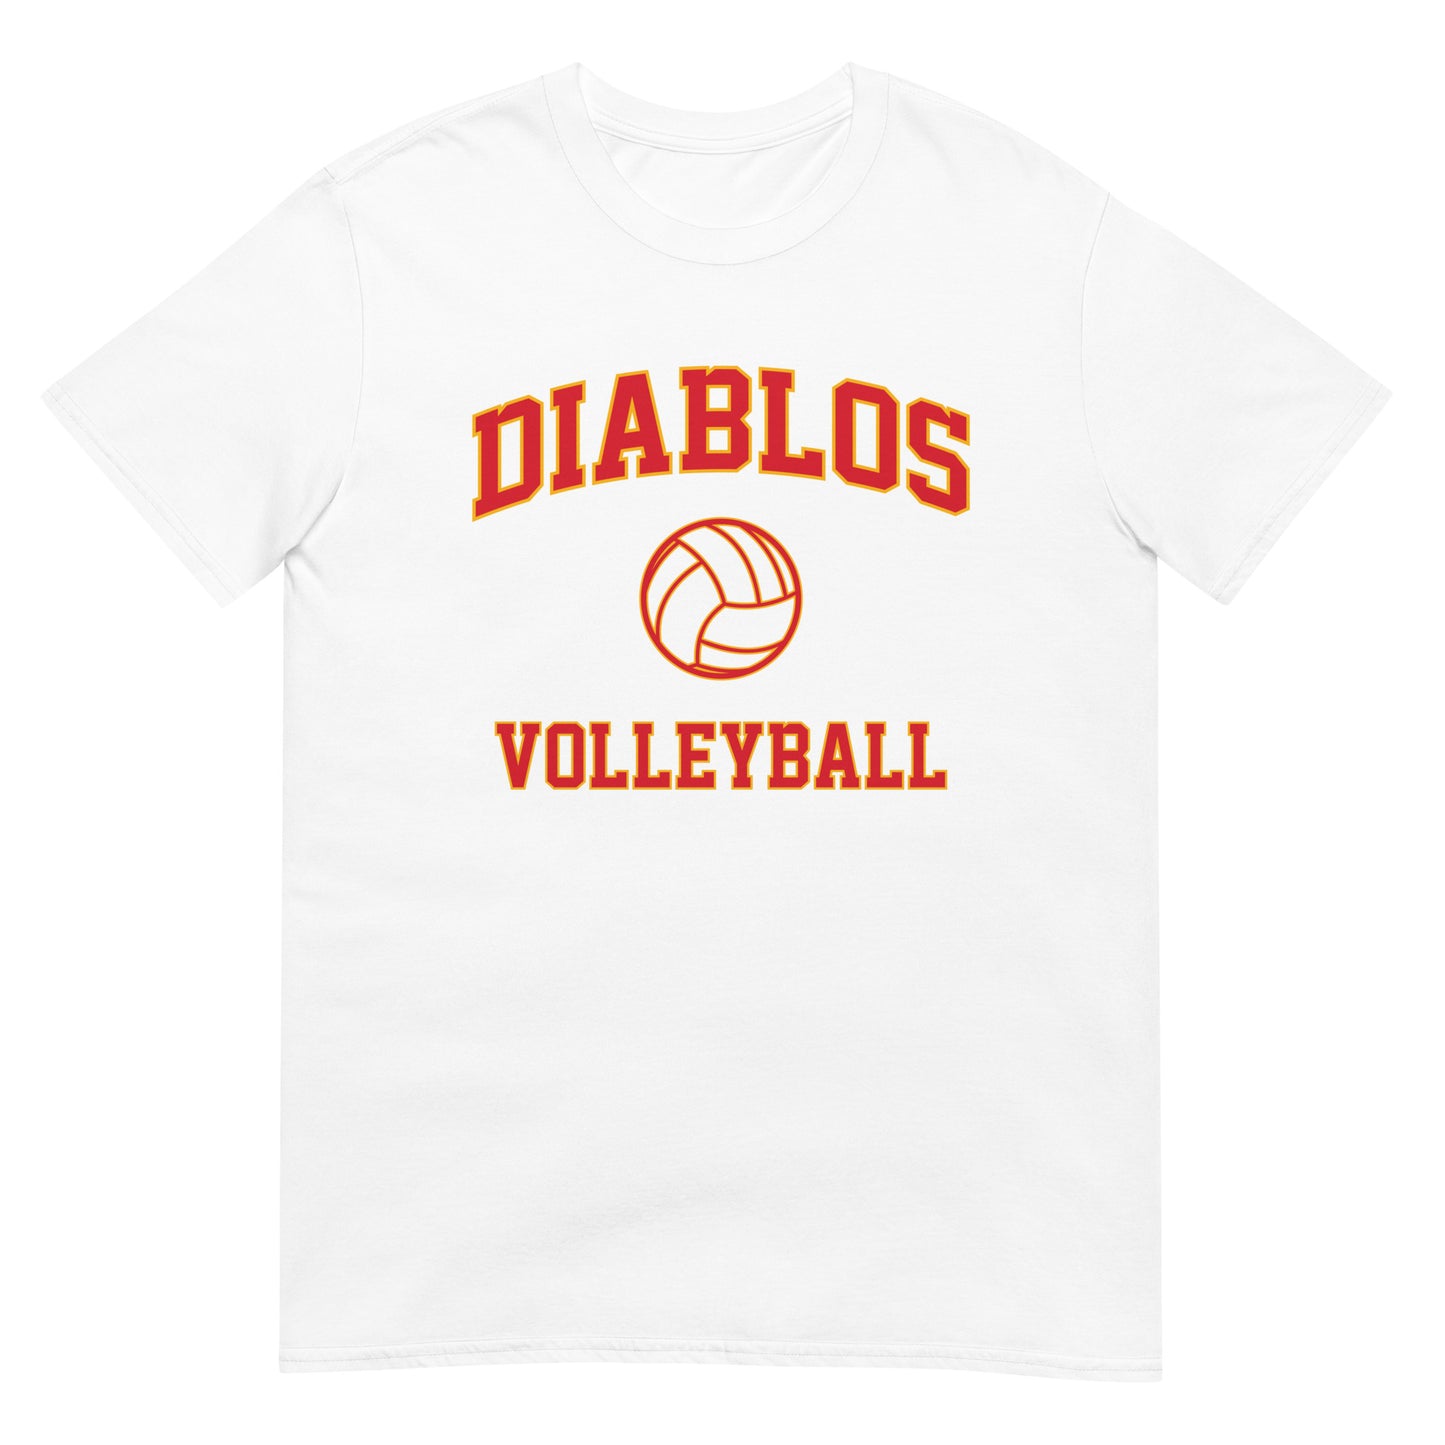 Diablos Volleyball Short-Sleeve Unisex T-Shirt